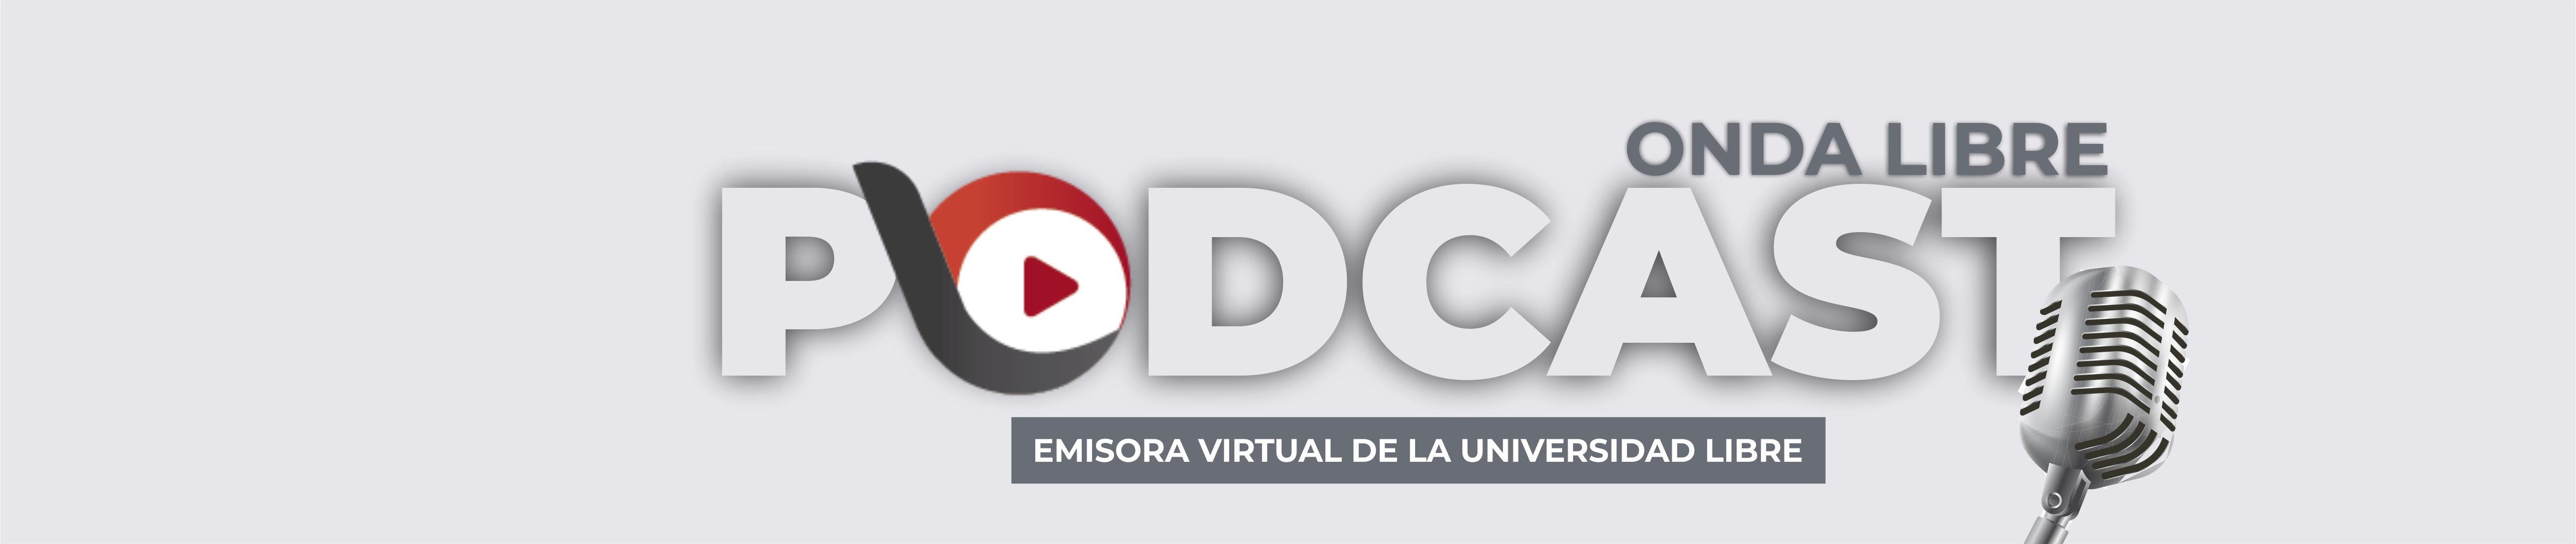 banner canal virtual